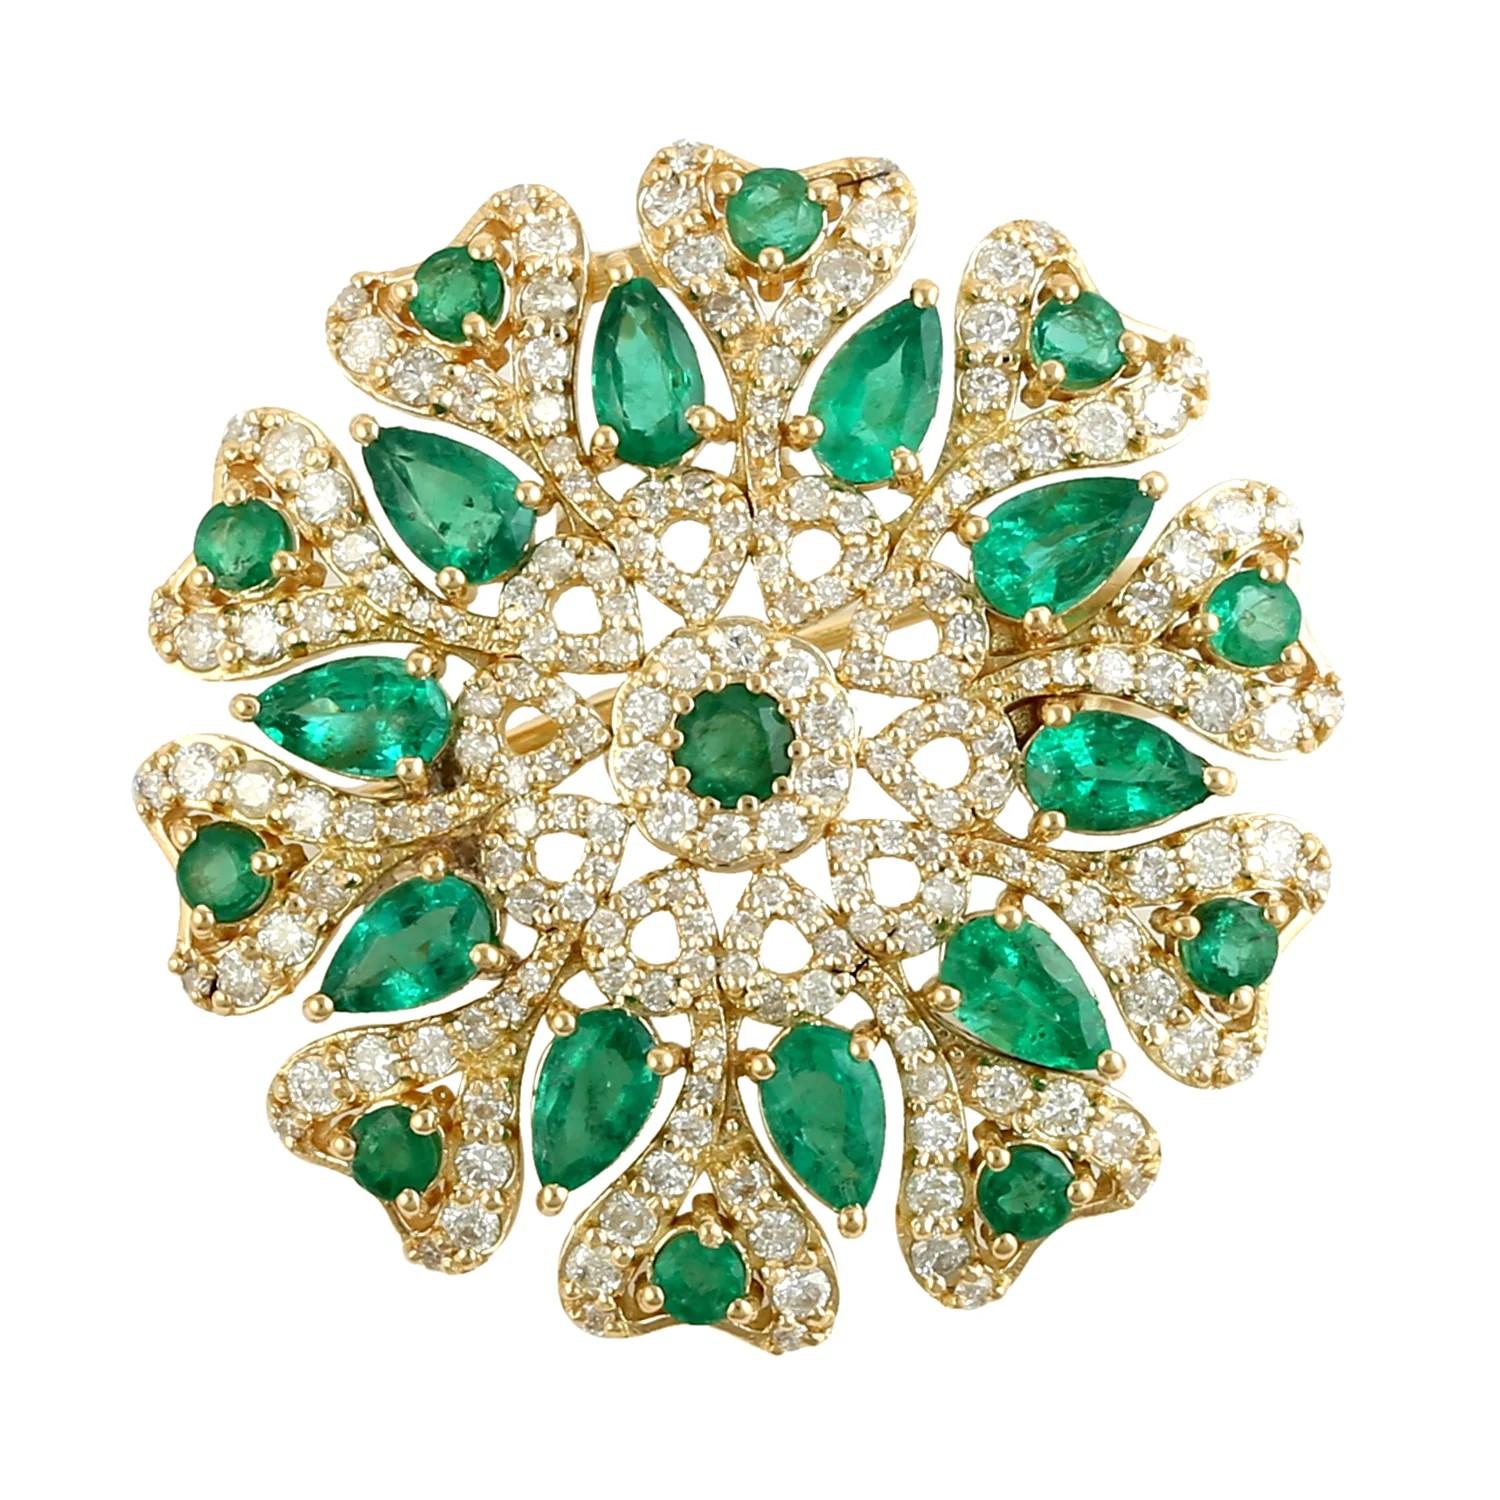 Mixed Cut Meghna Jewels 2.94 carats emerald diamond 14K Gold Heart Pendant Brooch For Sale